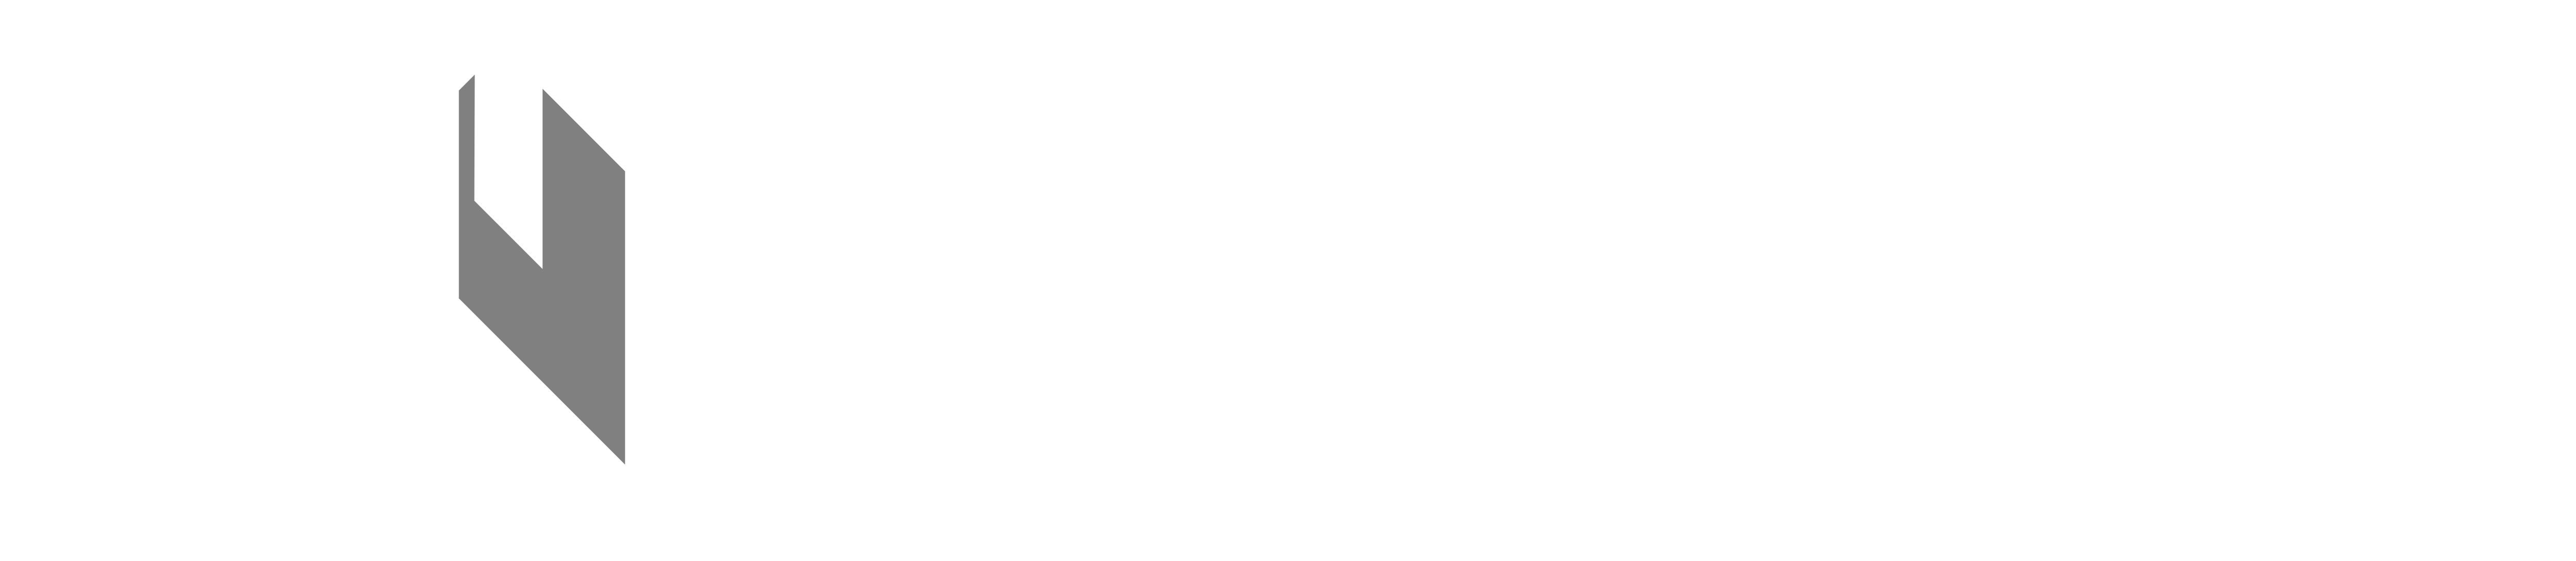 White Sage Property Group